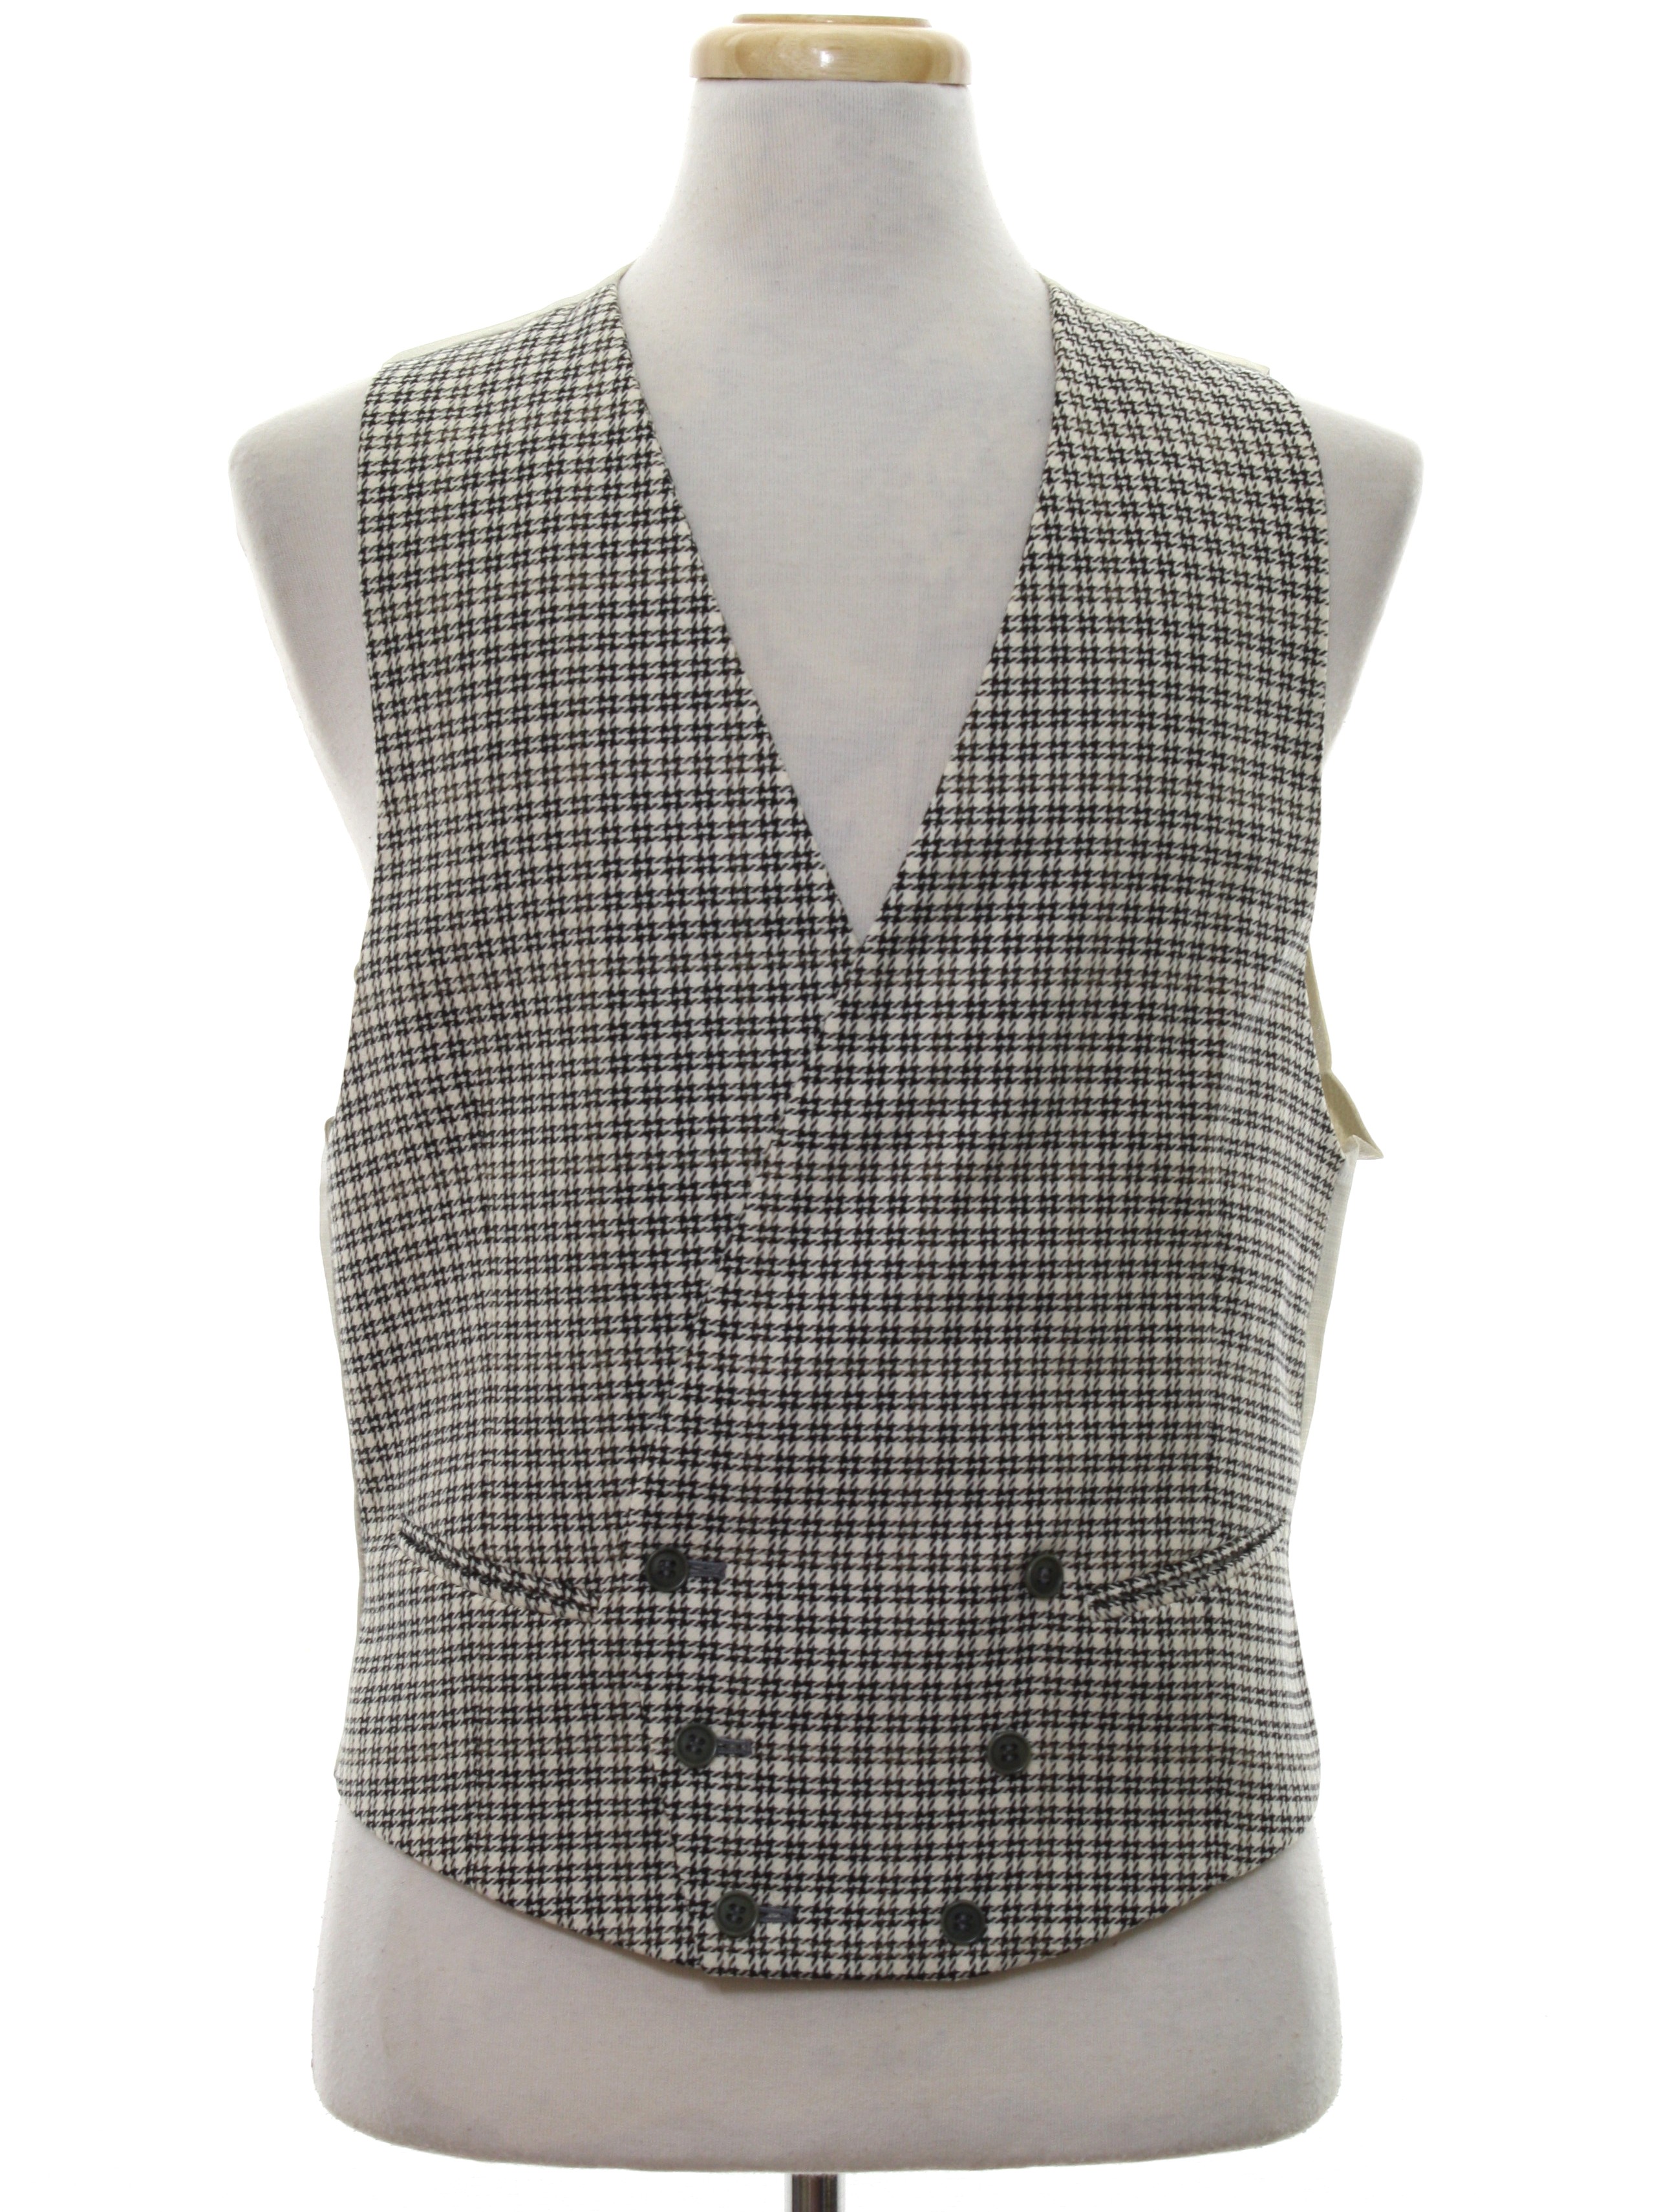 80's Vest: 80s -No Label- Mens white background, black, gray tattersall ...